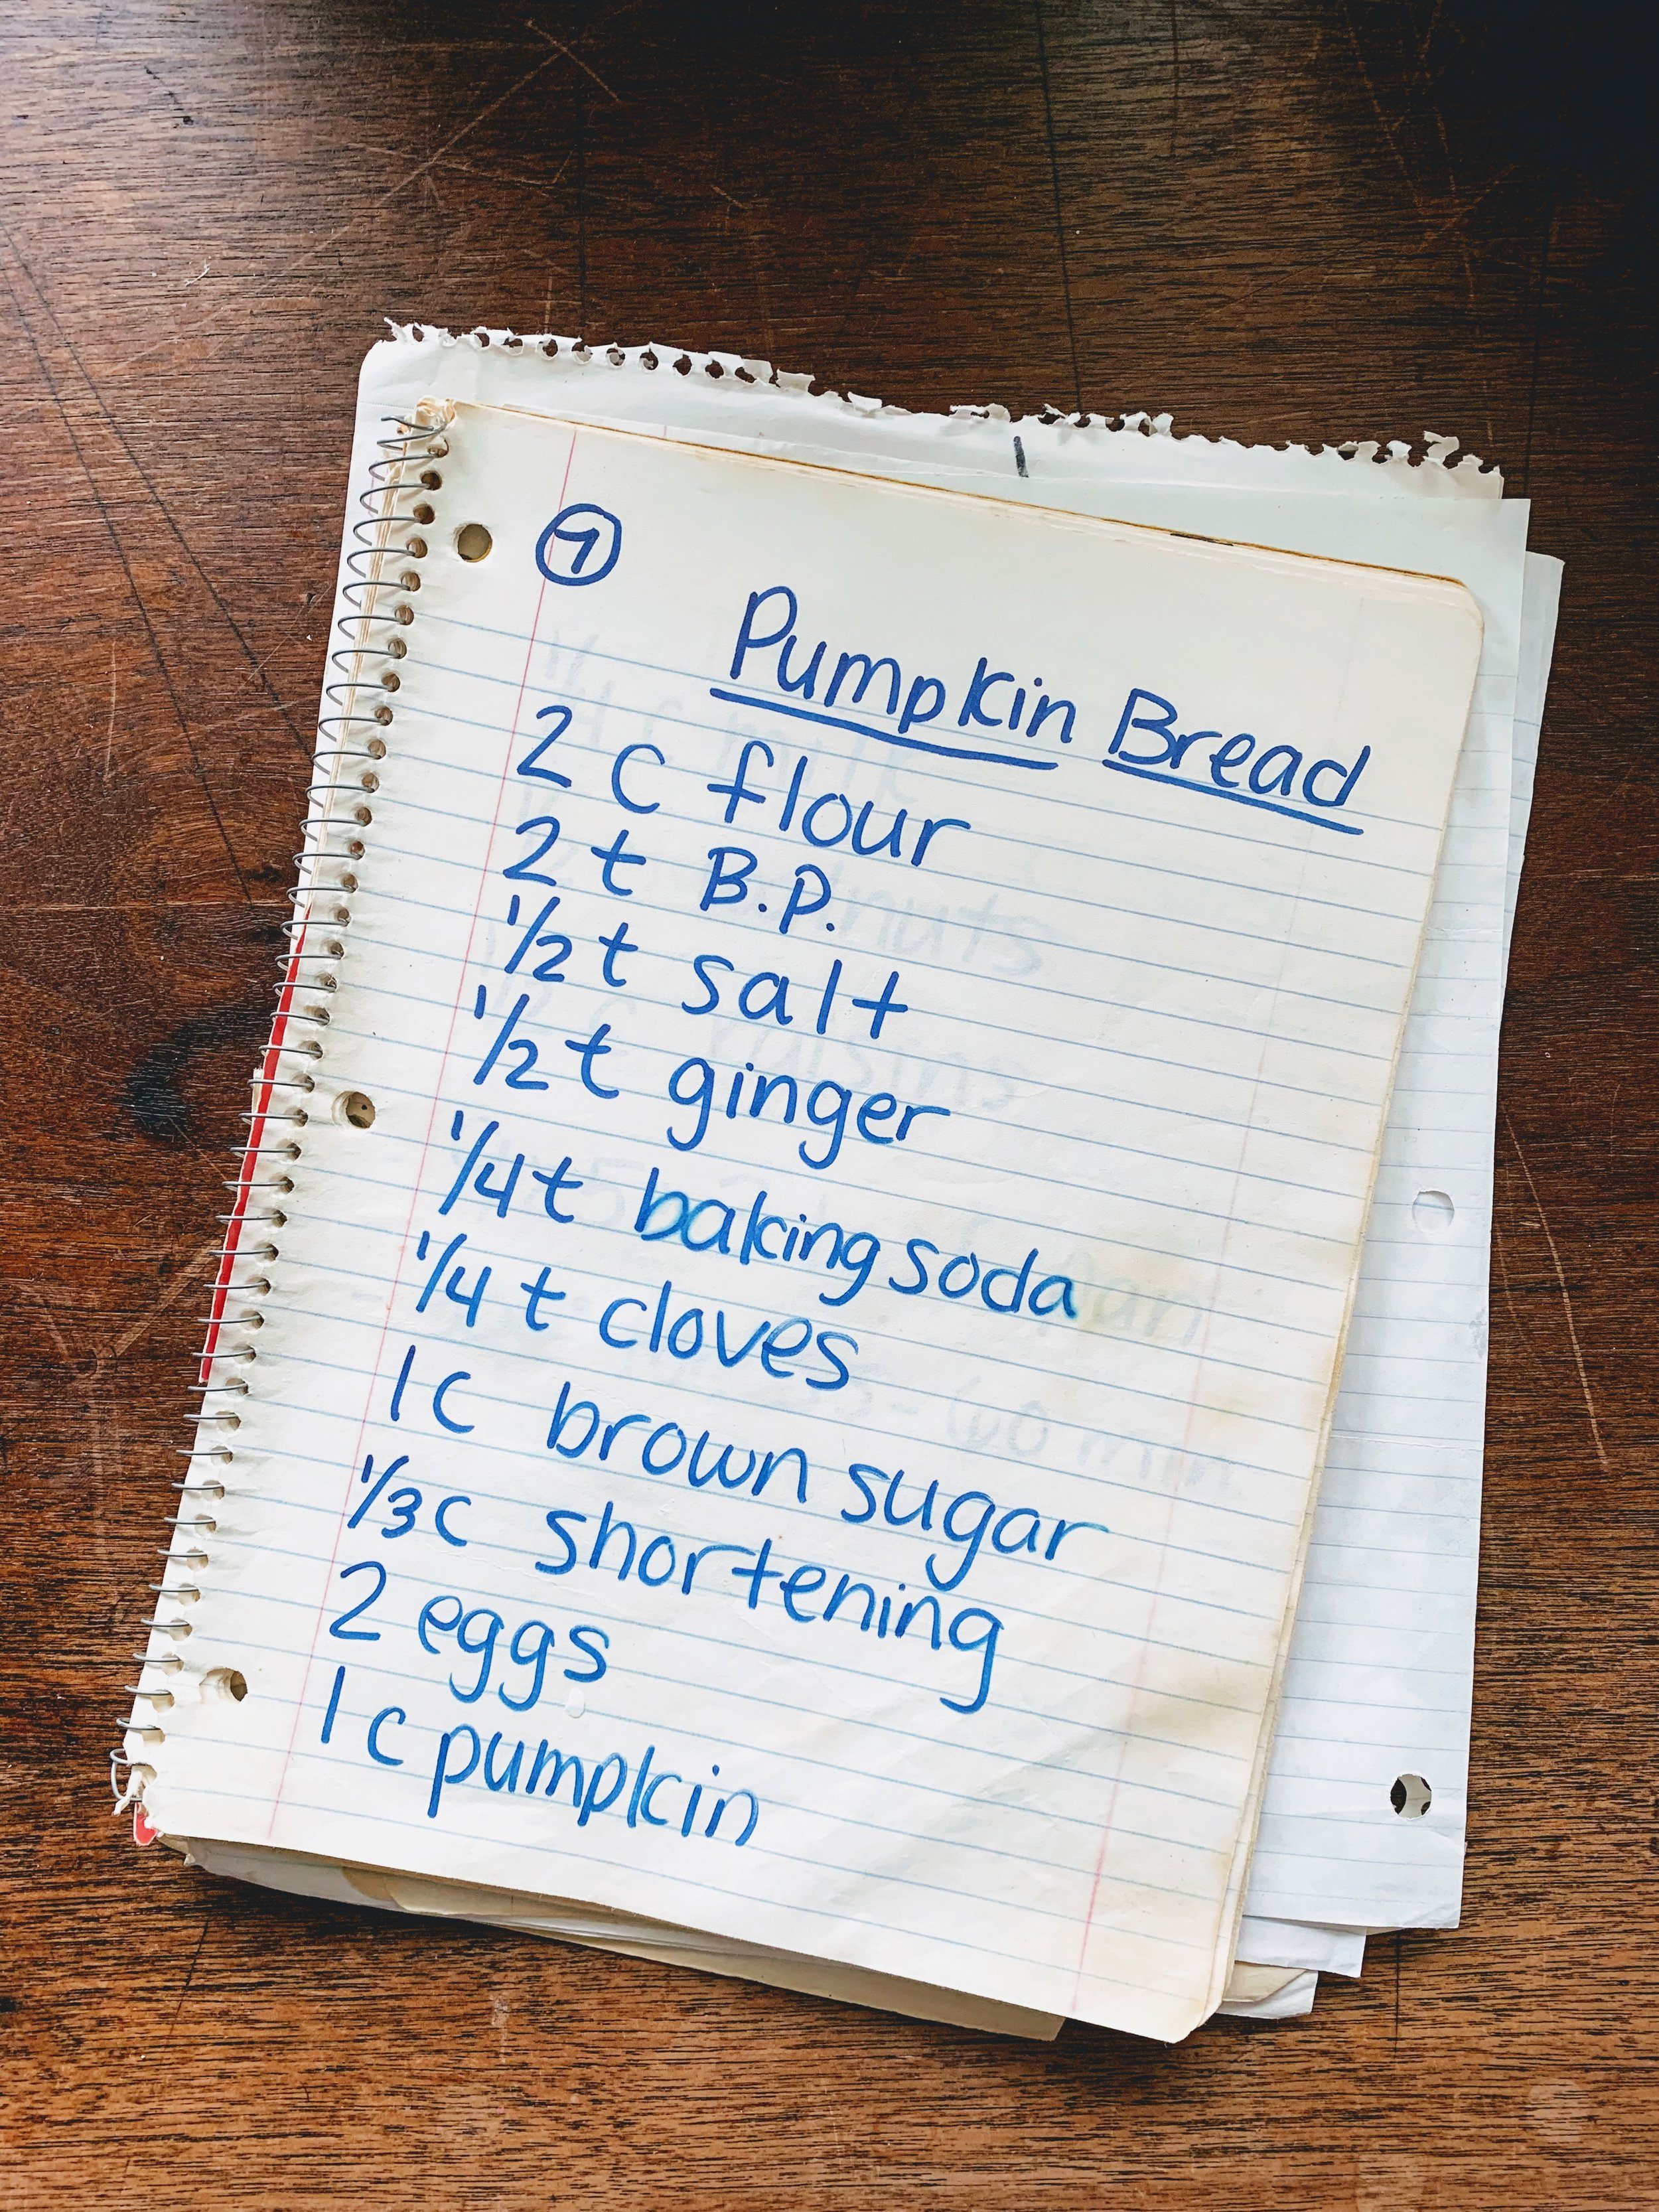 Gram's Souped-Up Pumpkin bread recipe book2.jpg